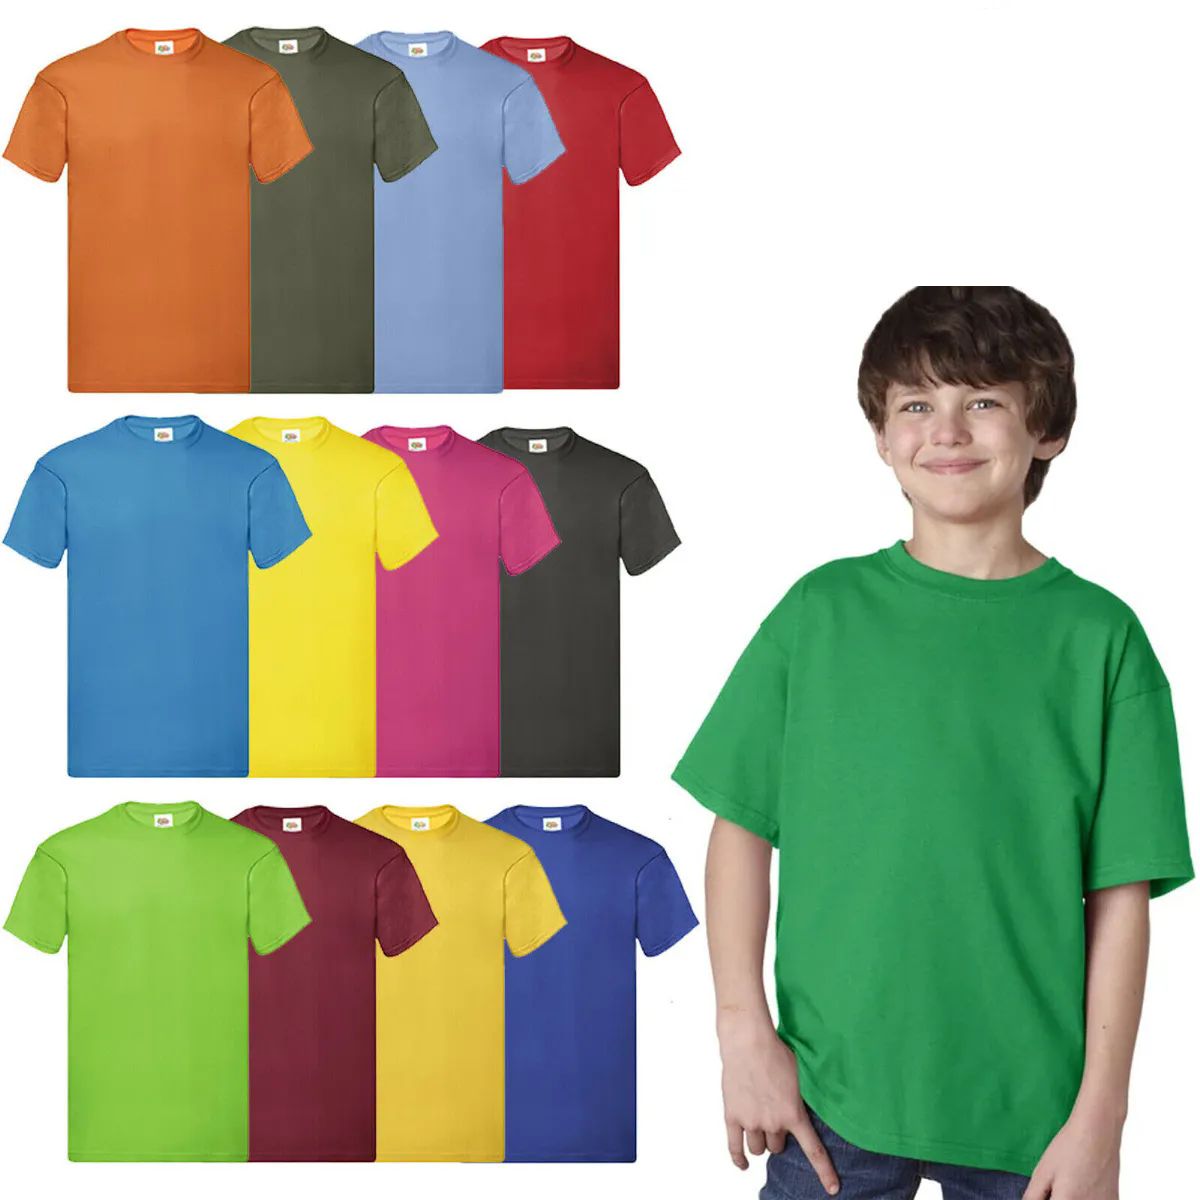 576 Wholesale Billion Hats Kids Youth Cotton Assorted Colors T Shirts Size M